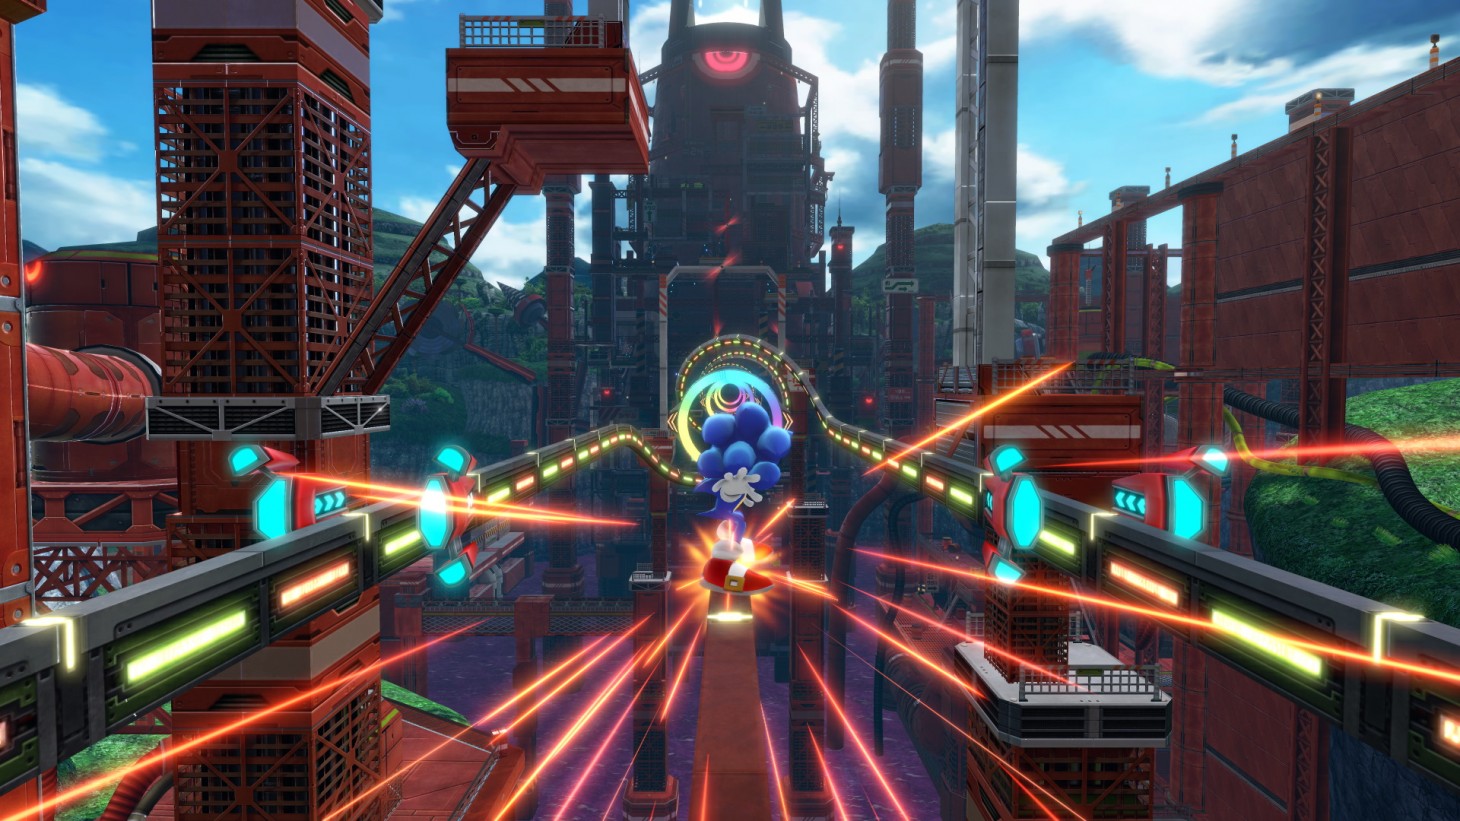 Sonic Colors: Ultimate - Nintendo Switch (digital) : Target